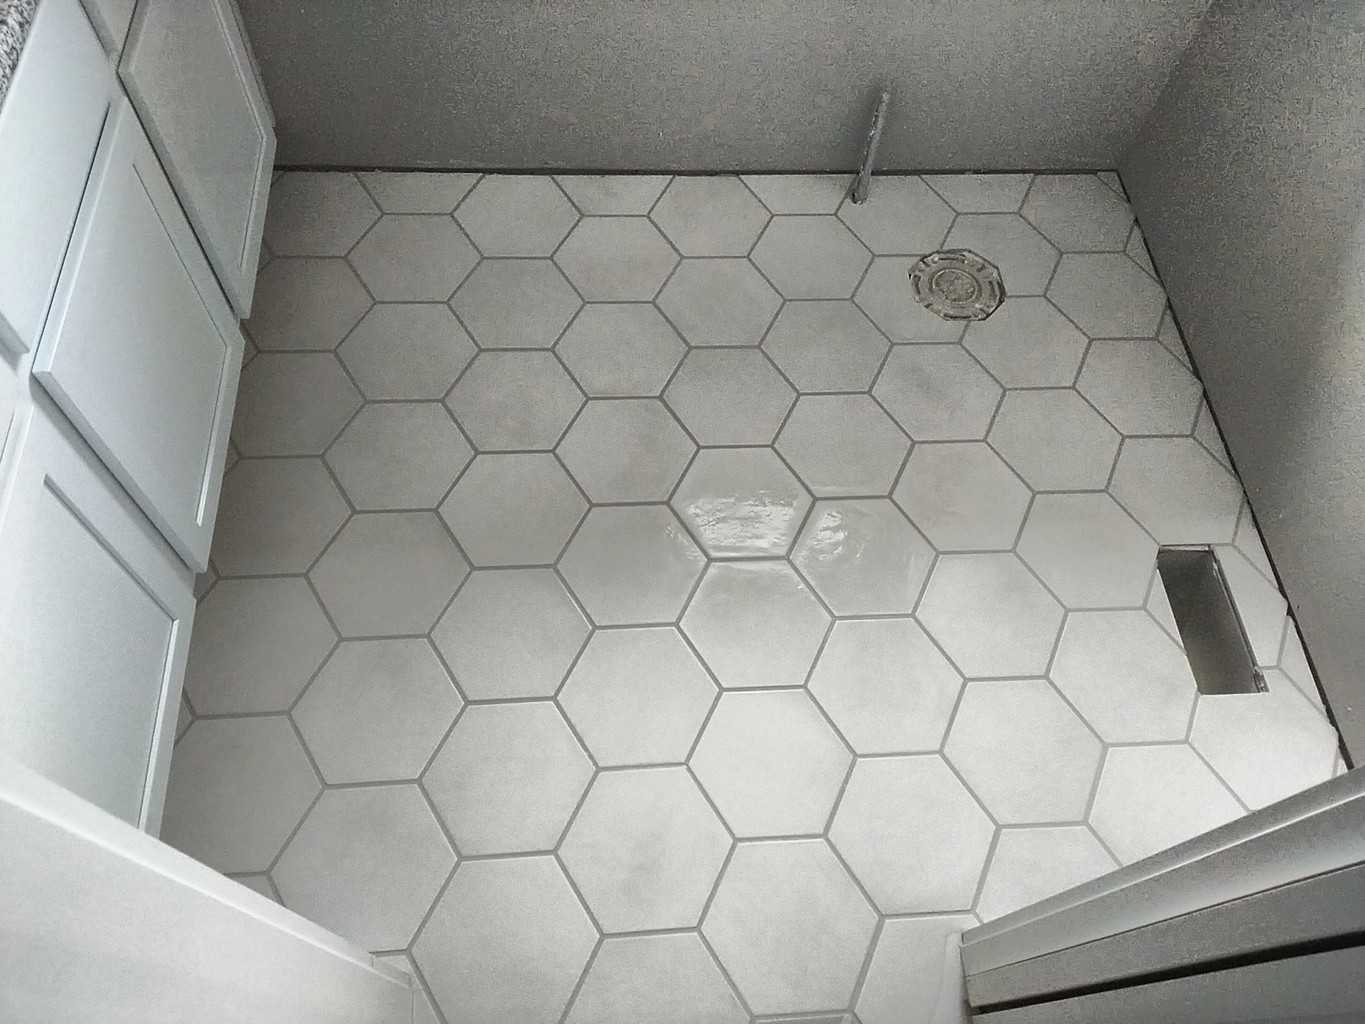 Install Large Hexagon Tiles On A Floor, Large Hexagon Tile